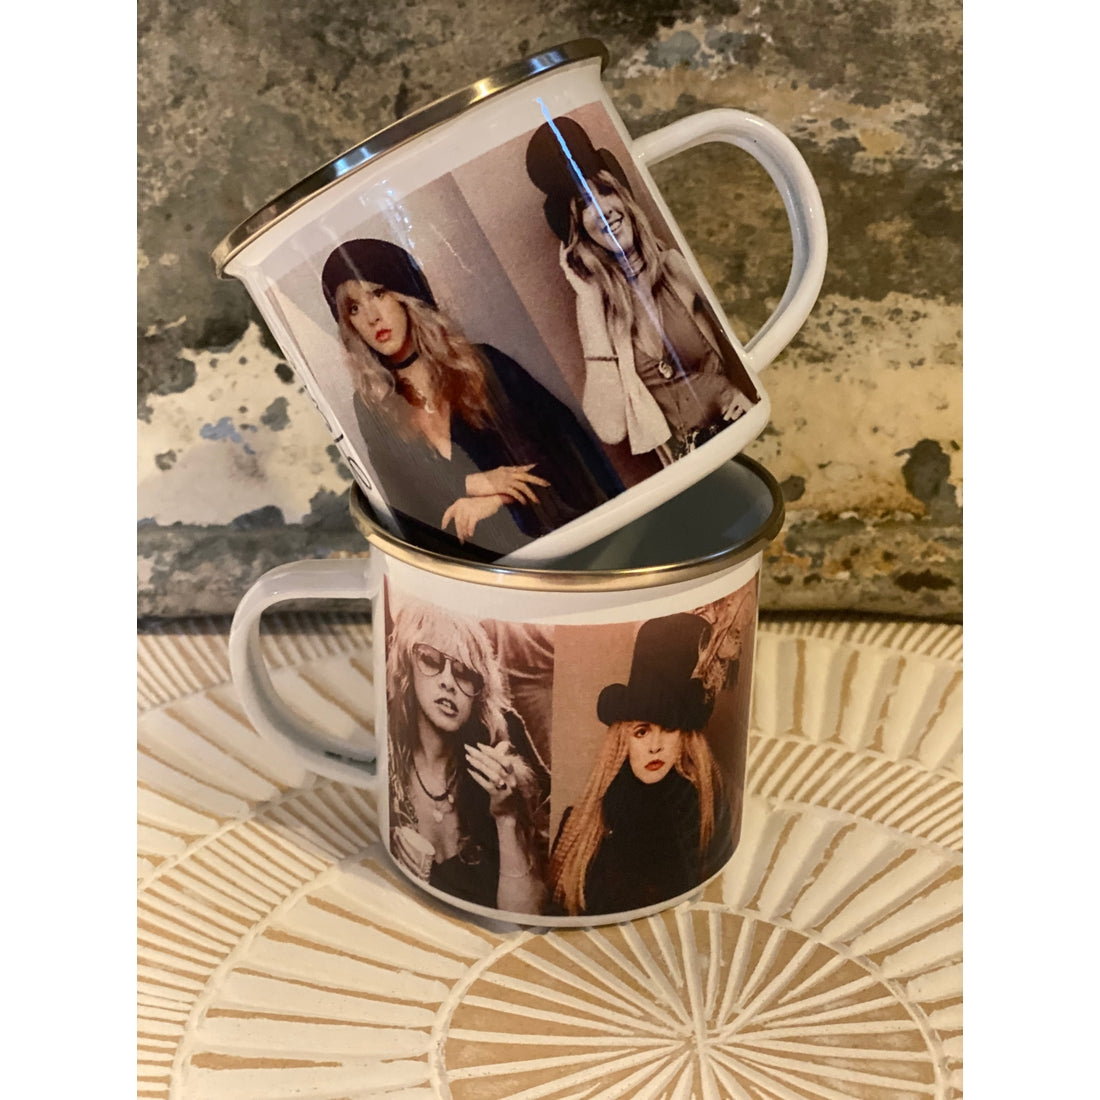 "Witchy Woman" Stevie Metal Coffee Mug